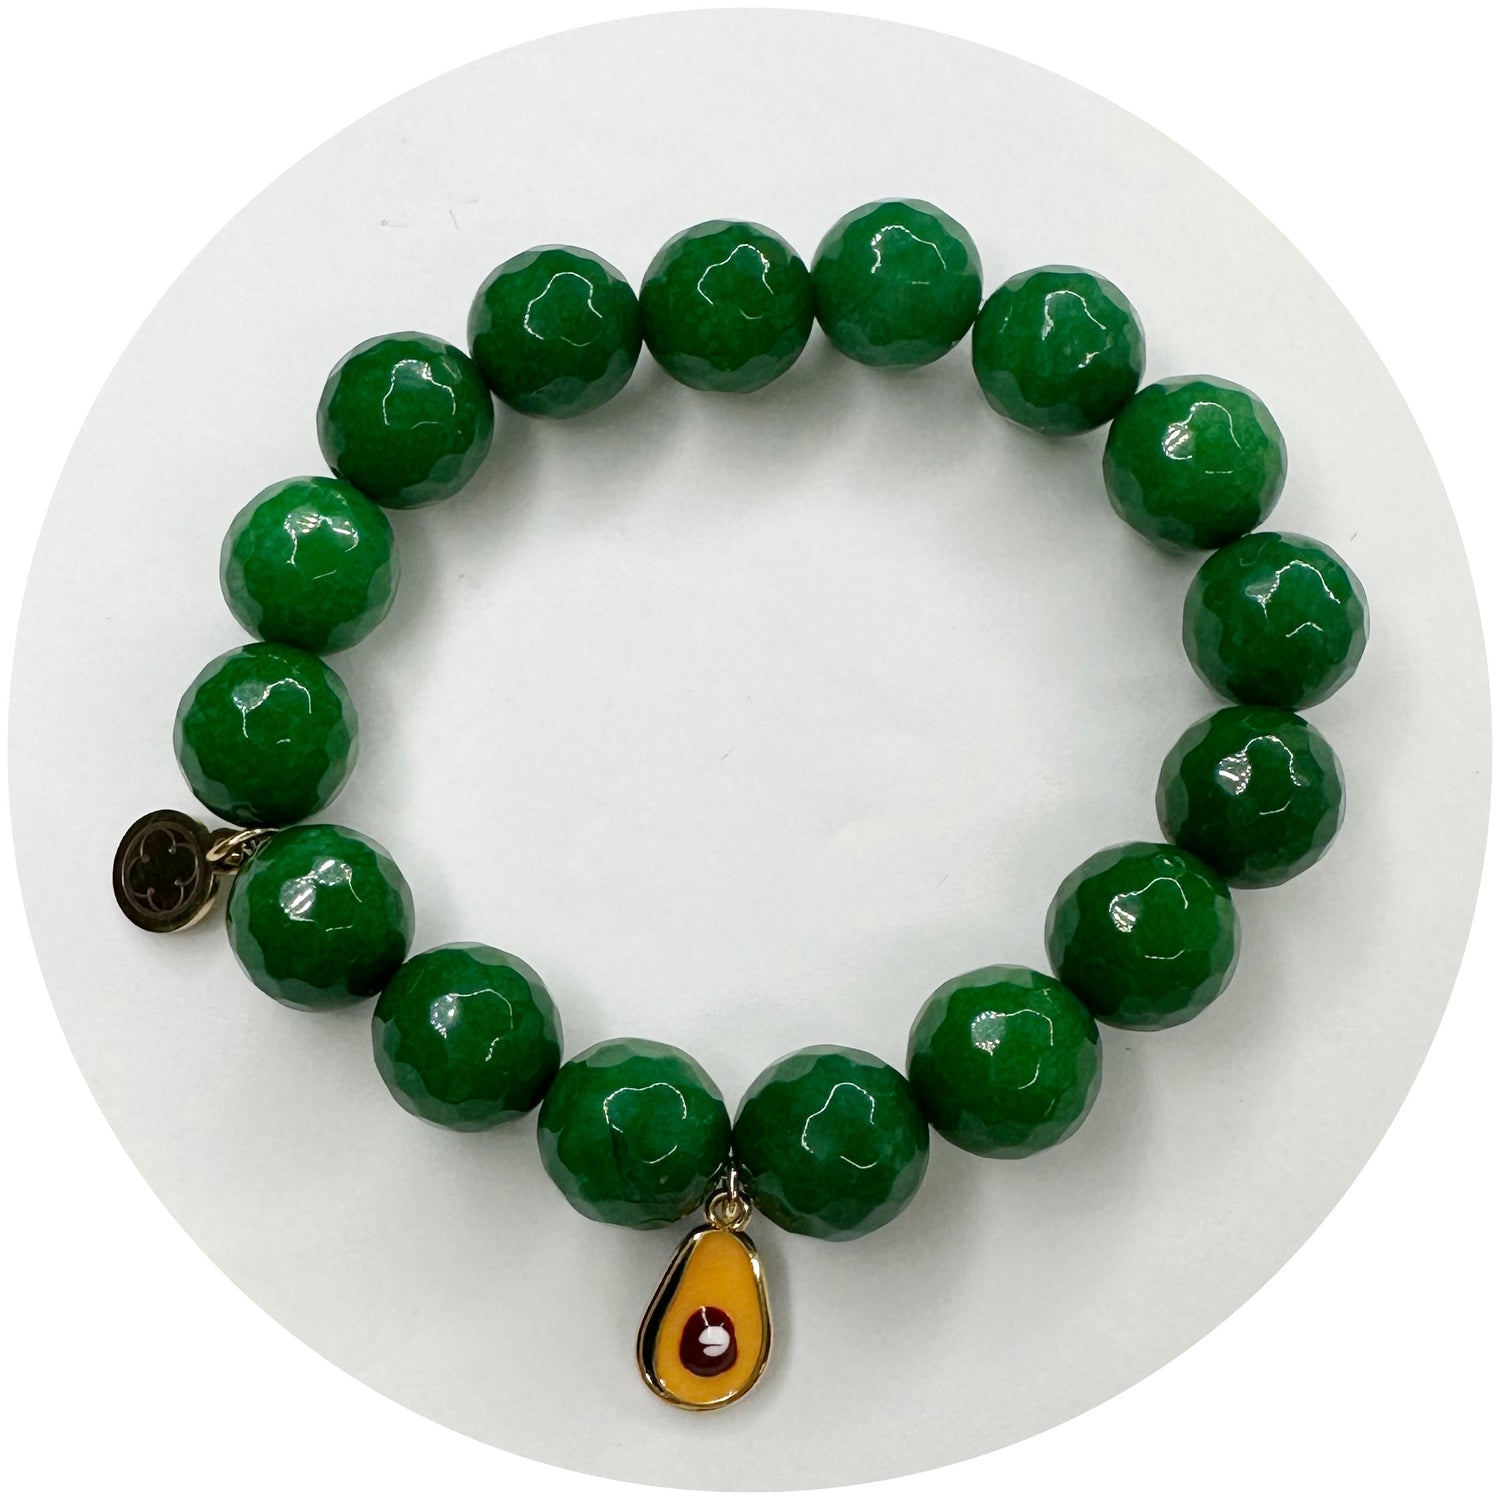 Emerald Green Jade with Avocado Pendant